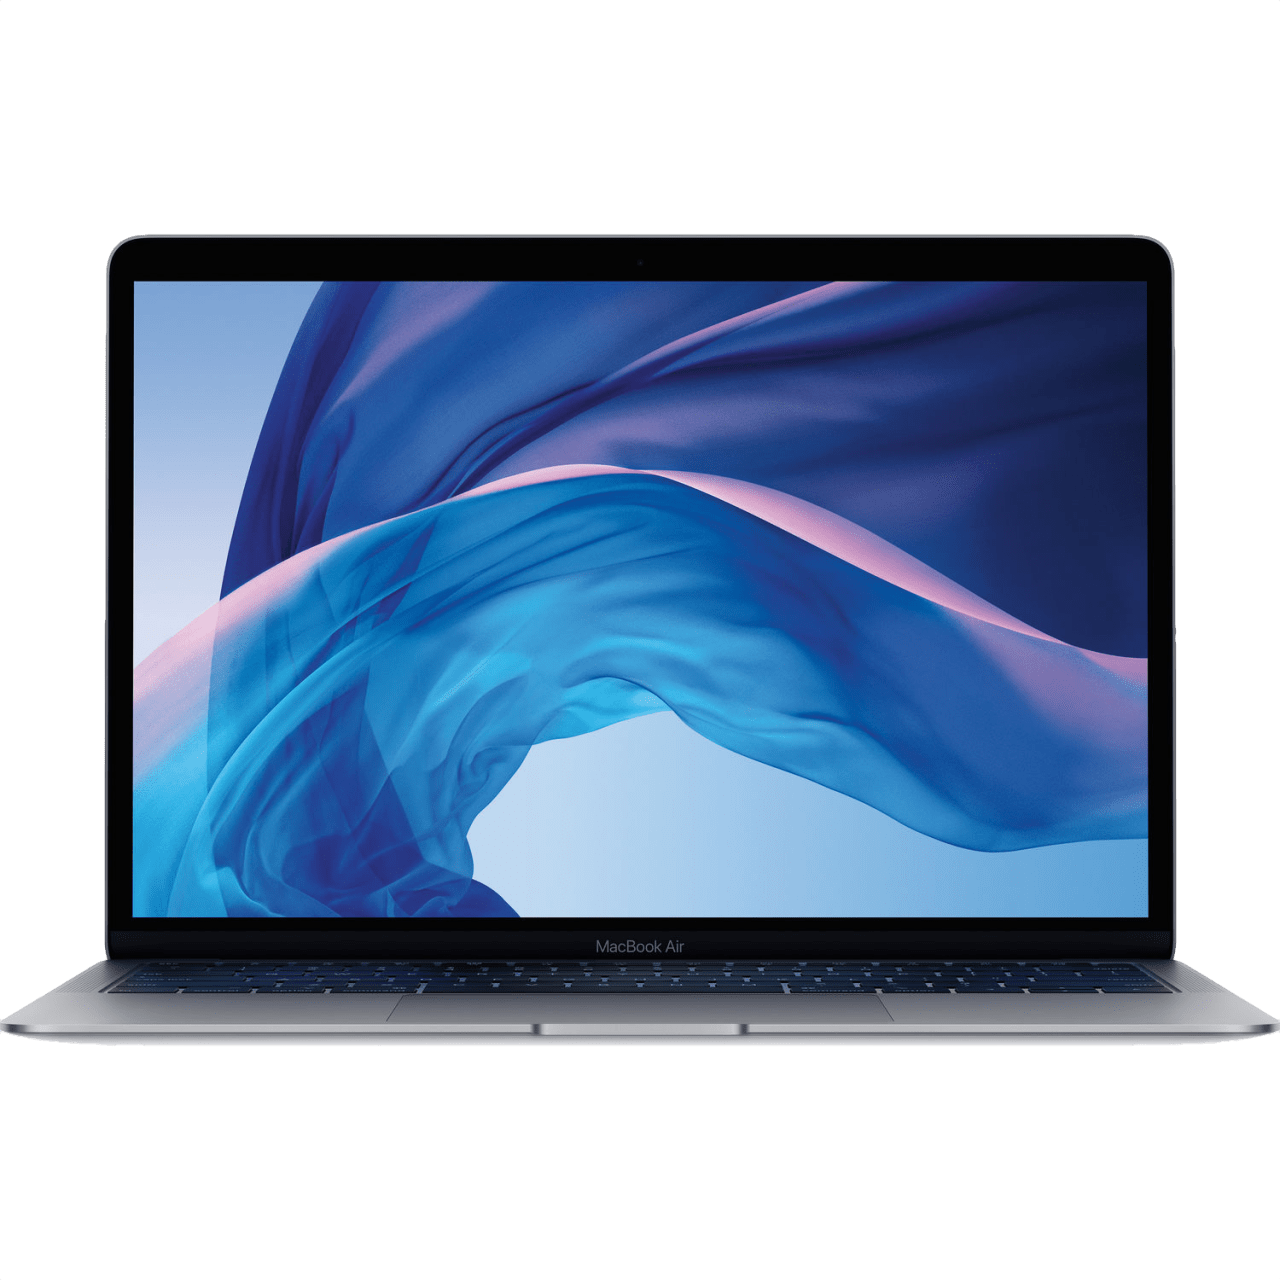 Space Grau Apple Macbook Air (Mid 2019) - English (QWERTY) Notebook - Intel® Core™ i5-8210Y - 16GB - 256GB SSD - Intel® UHD Graphics 617.1